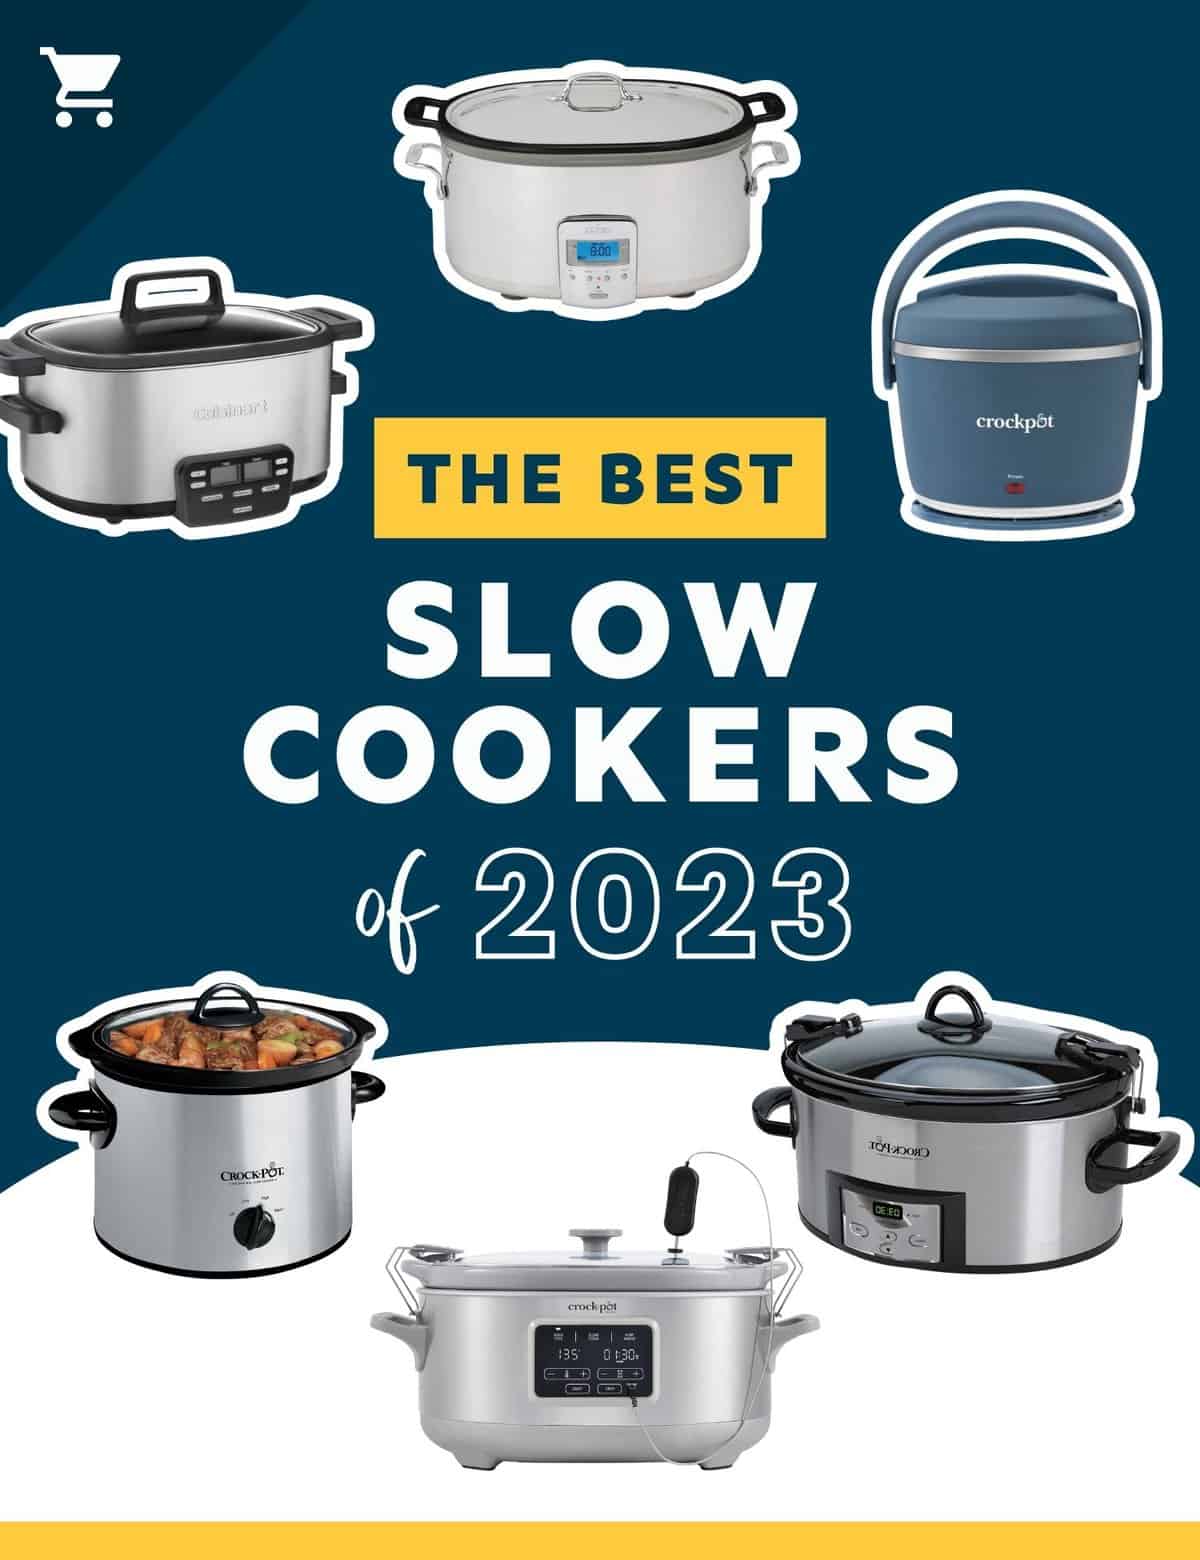 5 Best Slow Cookers of 2023 - Top-Reviewed Slow Cooker Brands